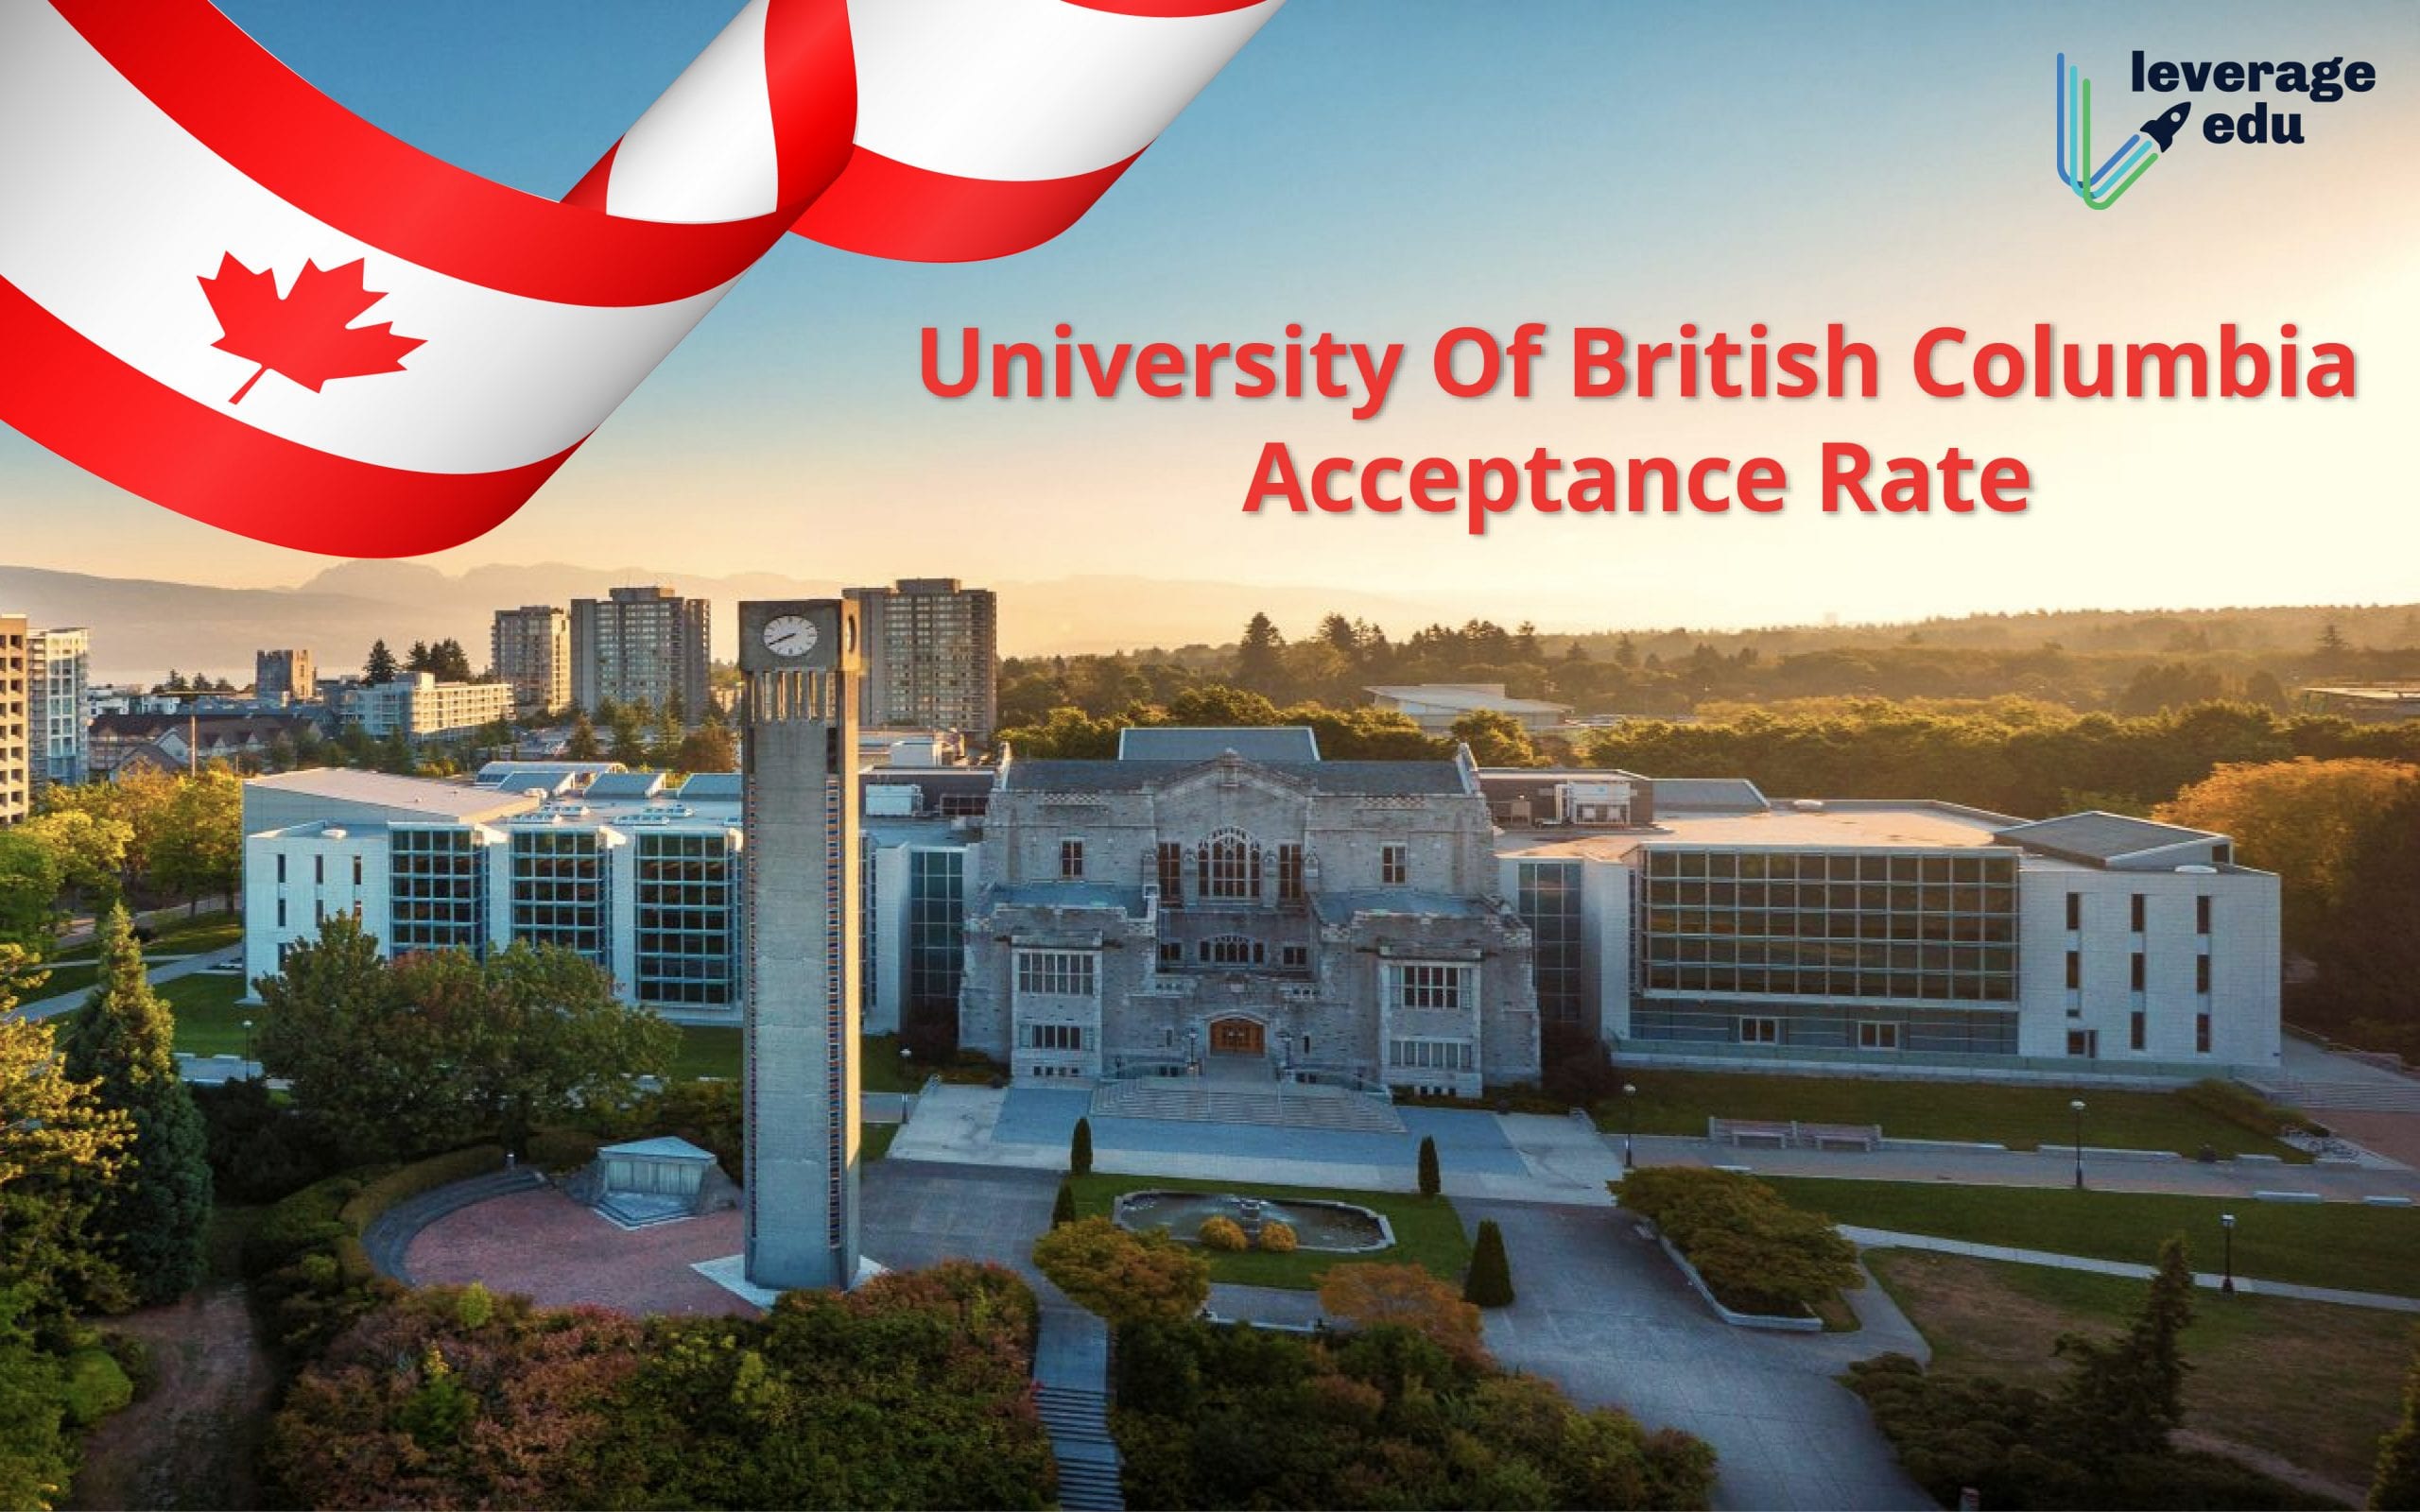 University of British Columbia Acceptance Rate 2021 - Leverage Edu